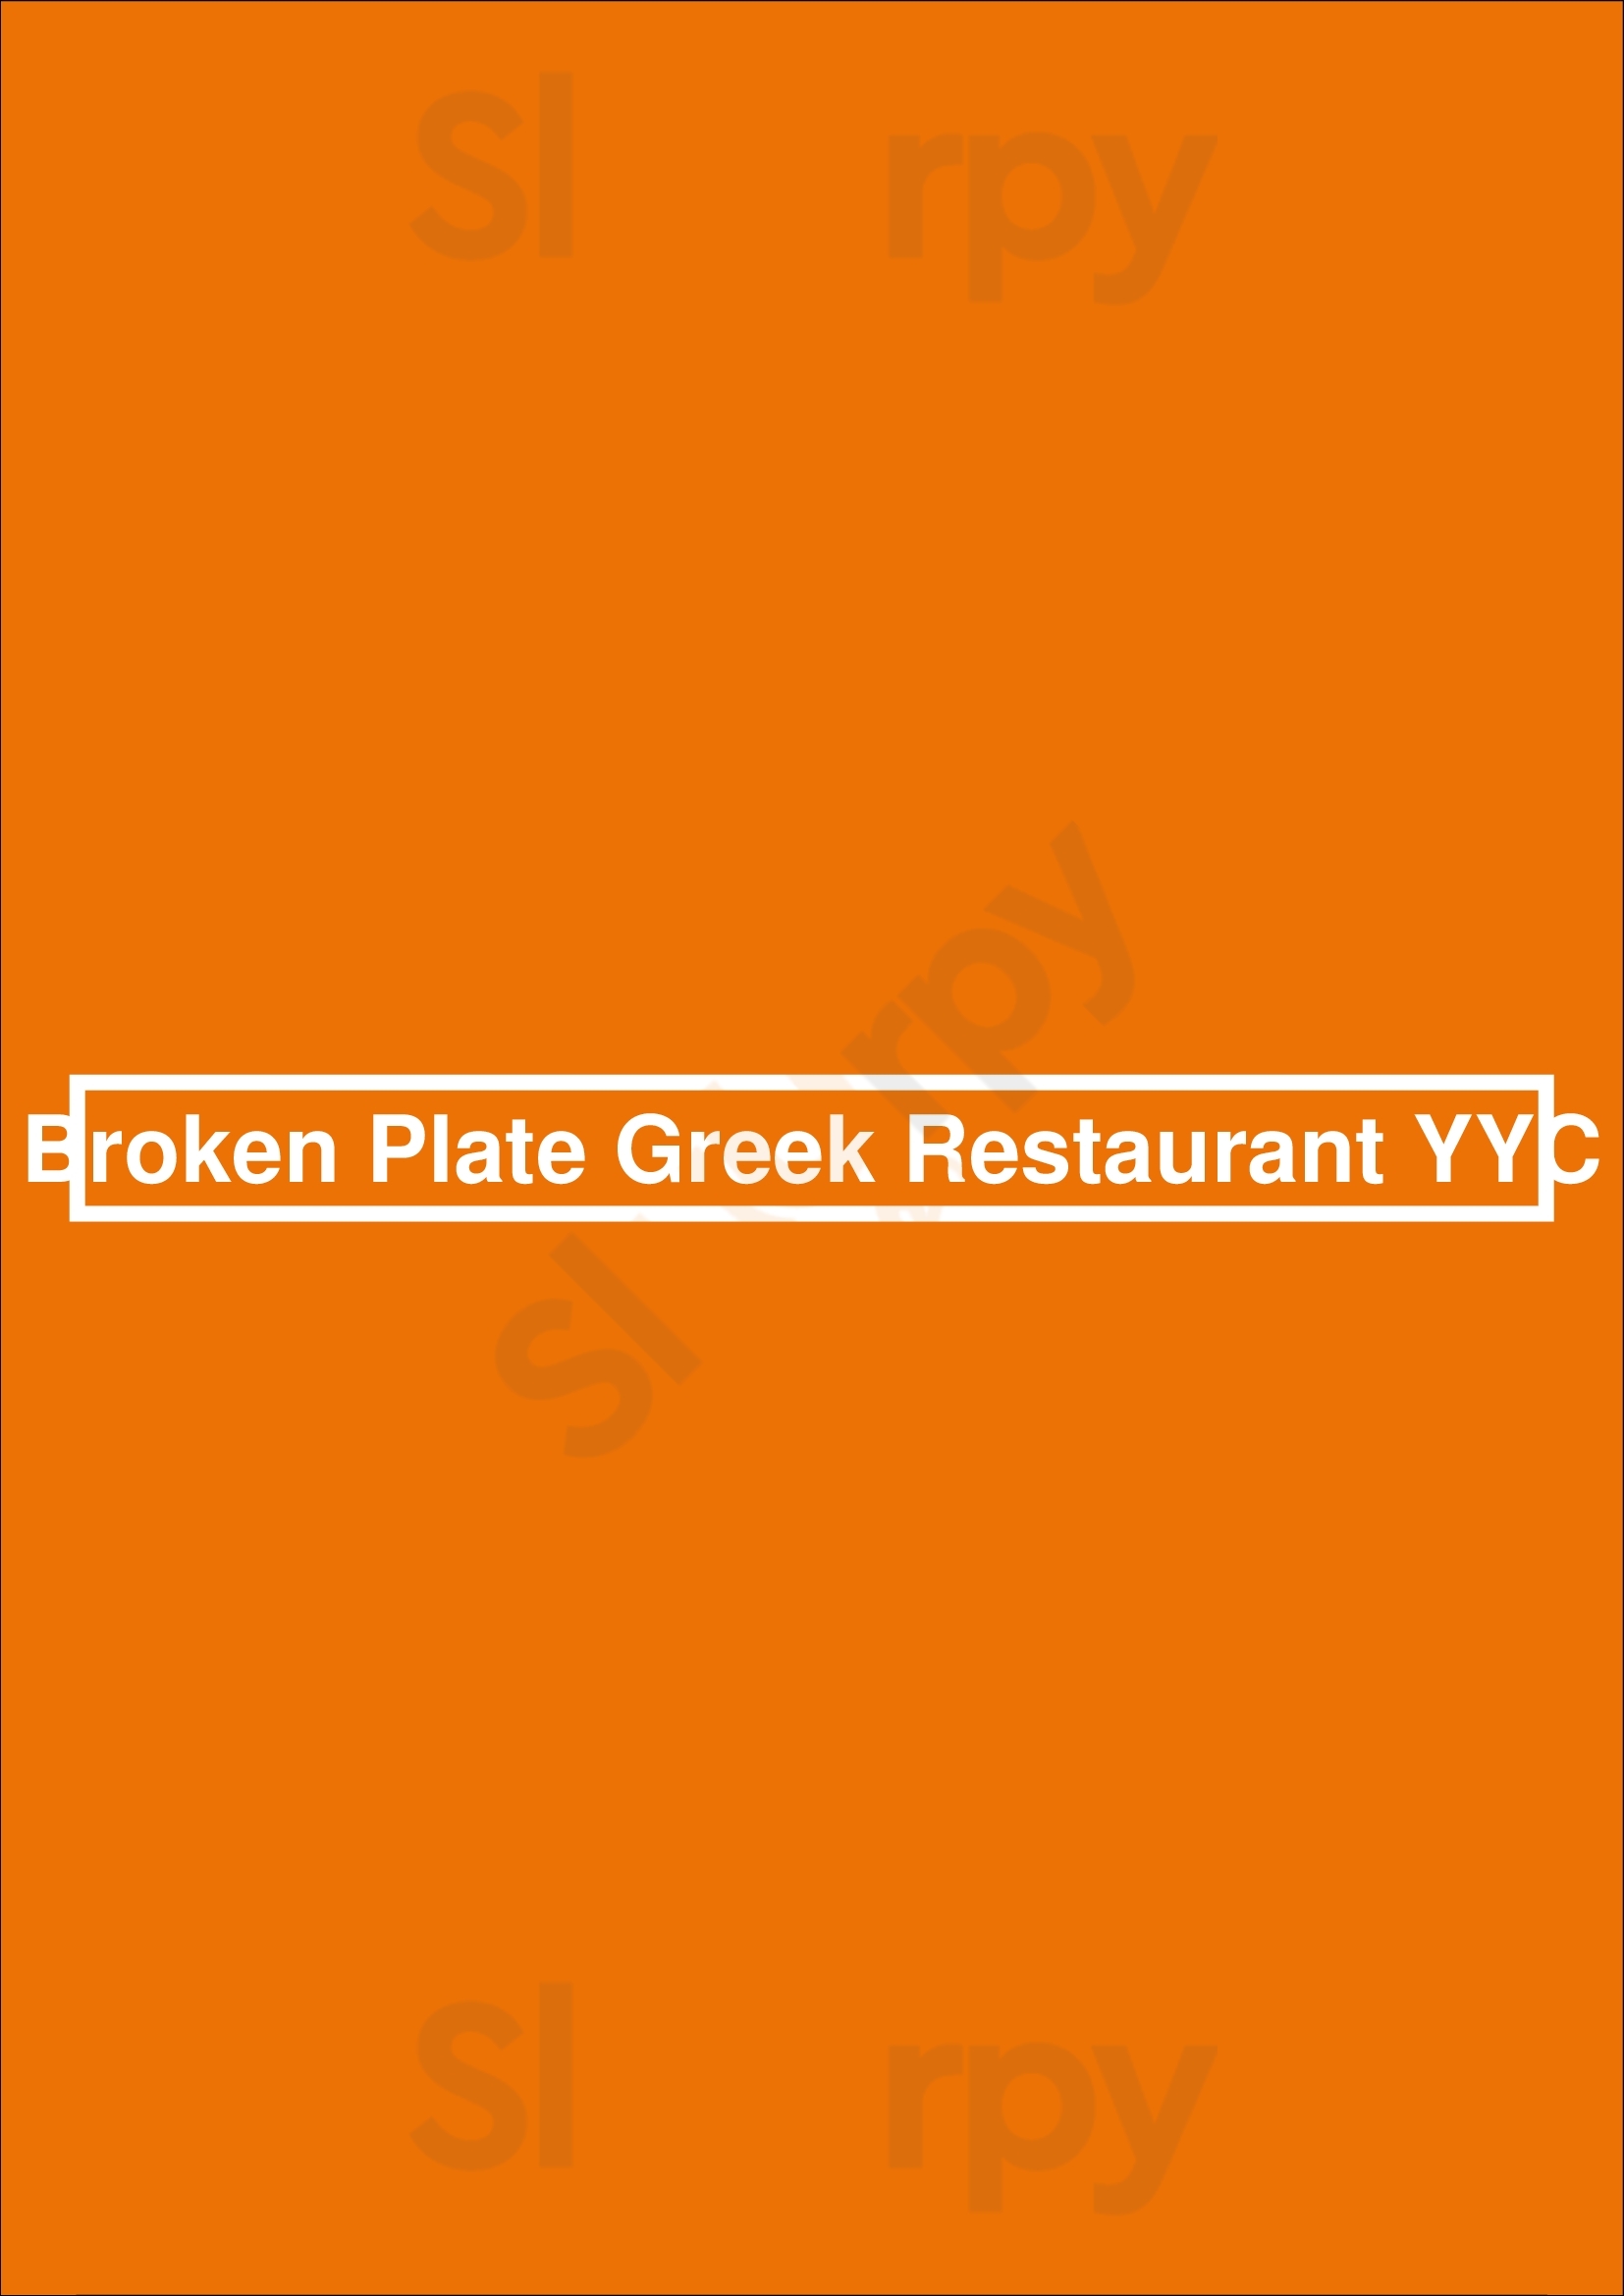 Broken Plate Greek Restaurant Yyc Calgary Menu - 1